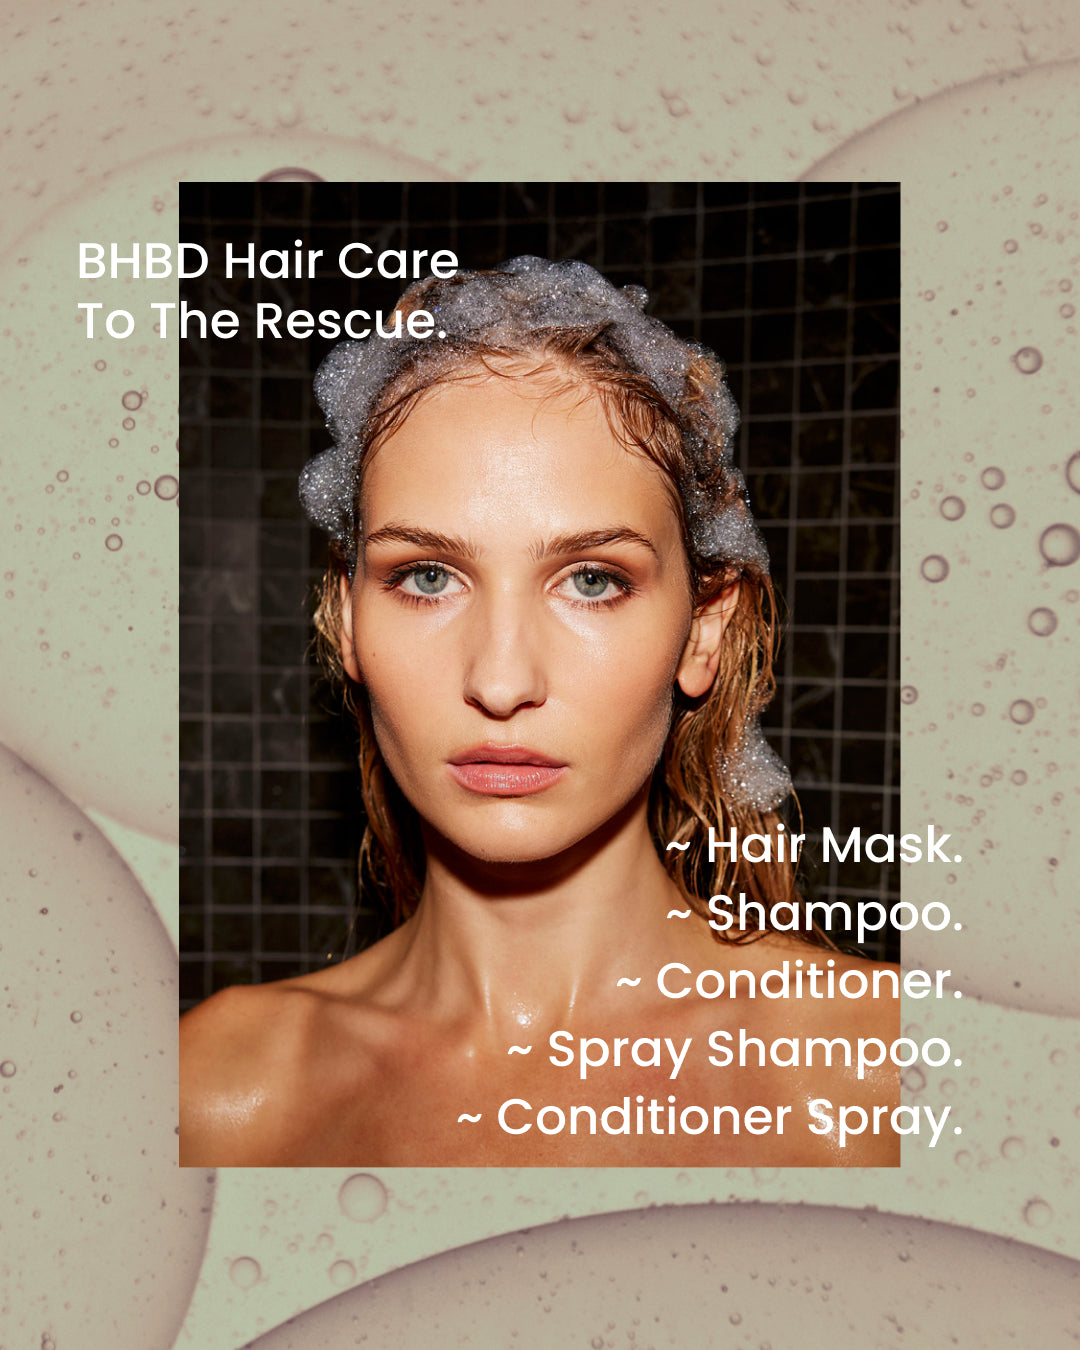 BHBD hair care lansering